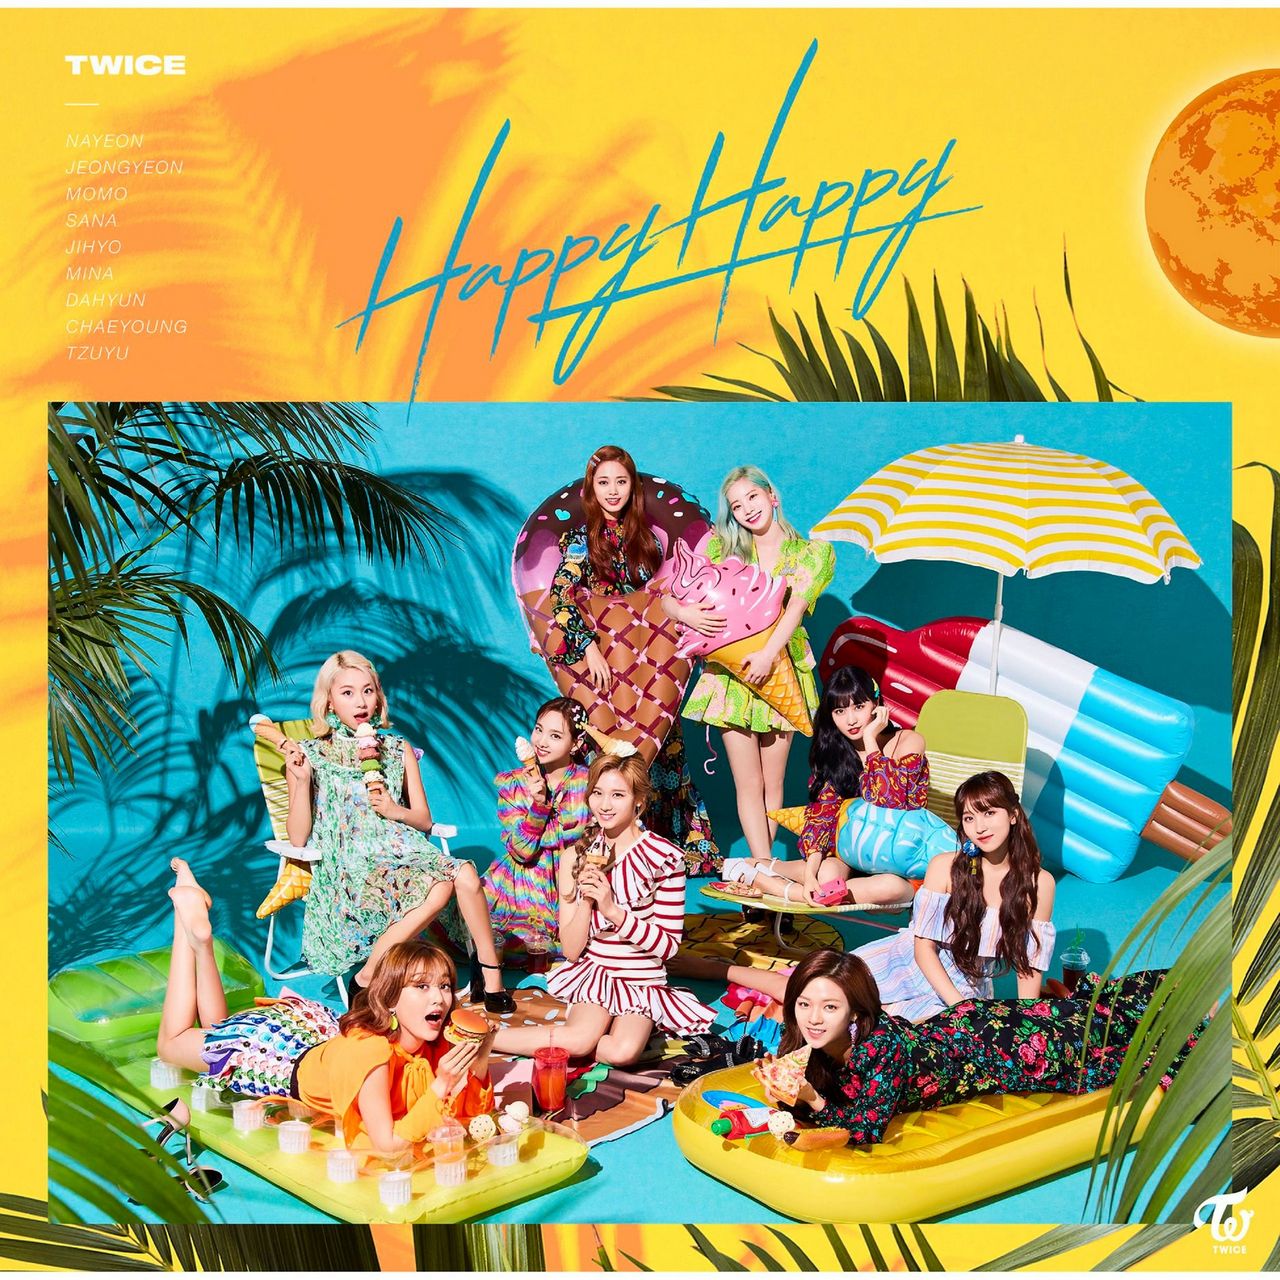 Kfeets Jihyo Twice Happy Happy Album Cover Fee